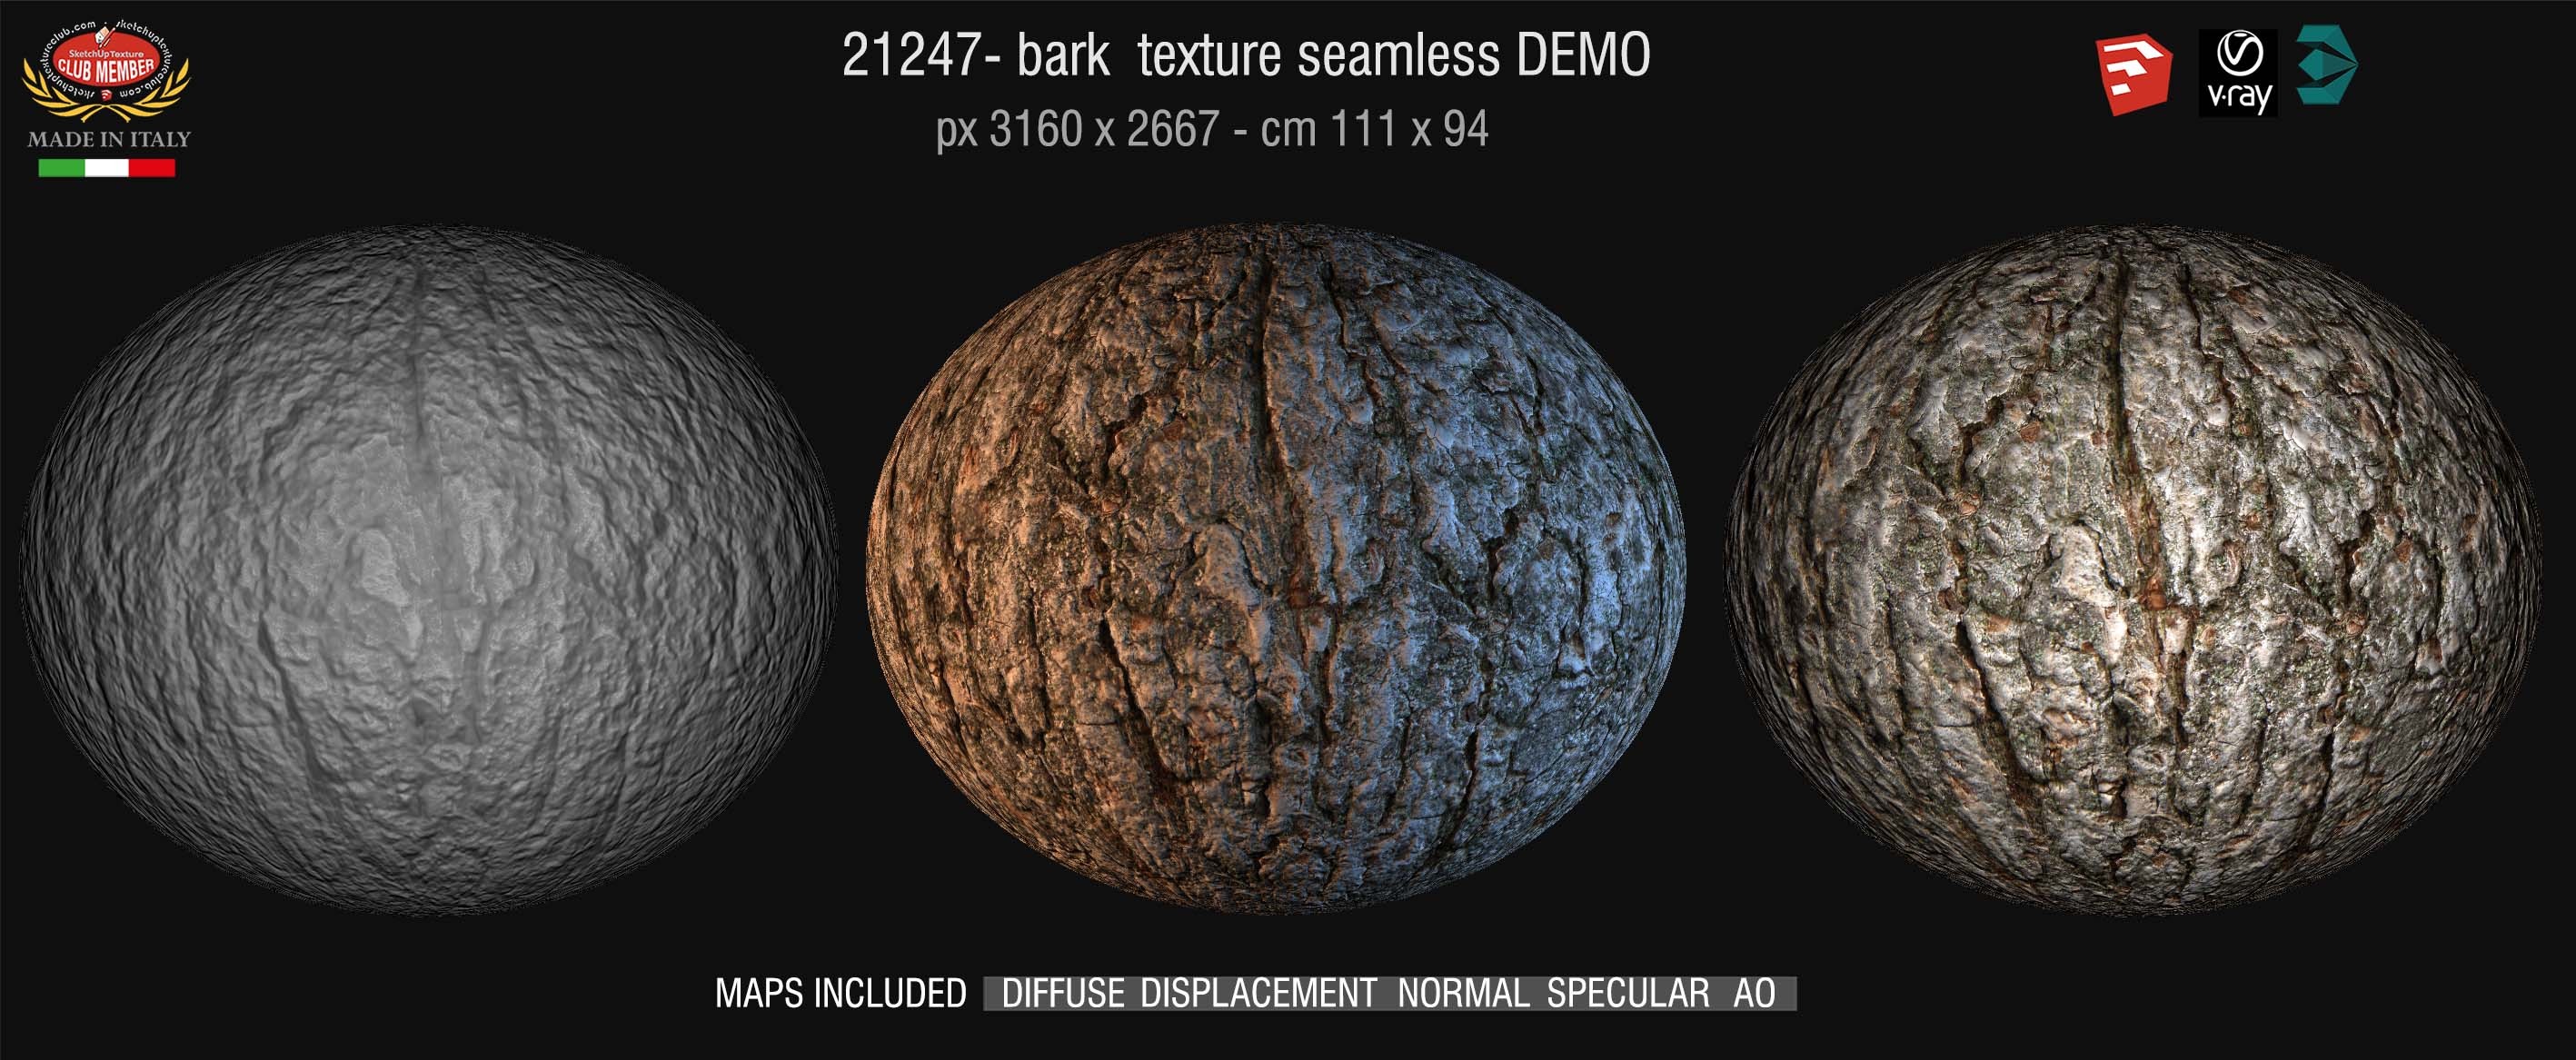 21247 bark texture seamless + maps DEMO